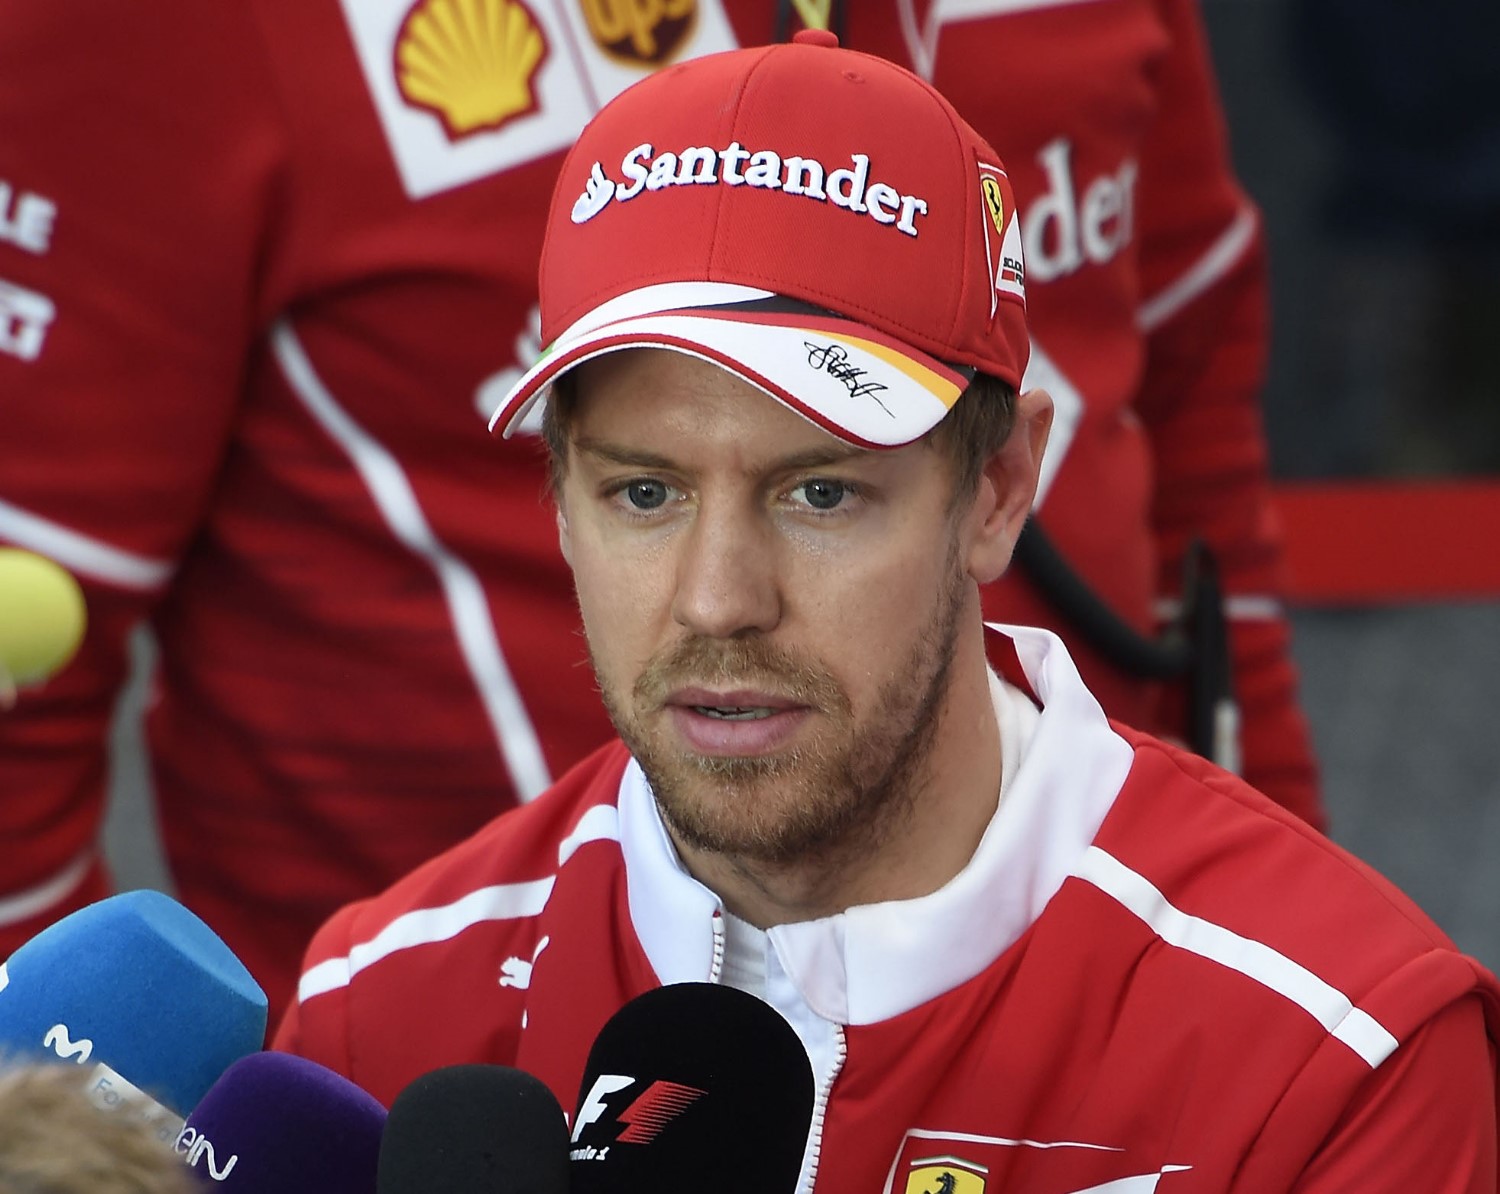 Vettel talks to the media